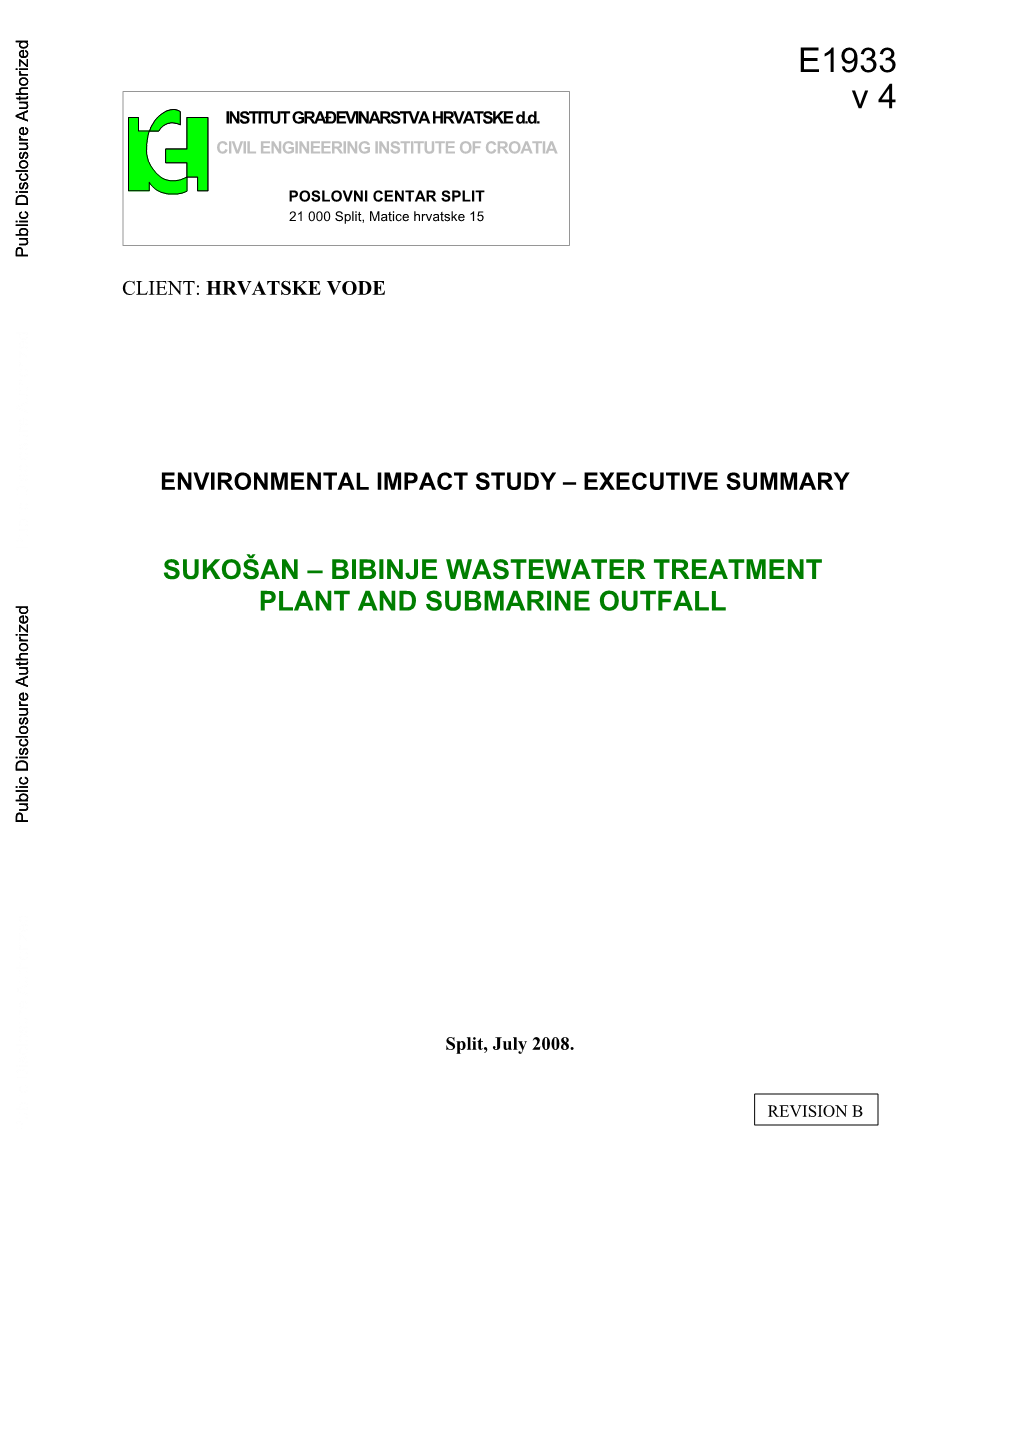 Sukošan – Bibinje Wastewater Treatment Plant and Submarine Outfall